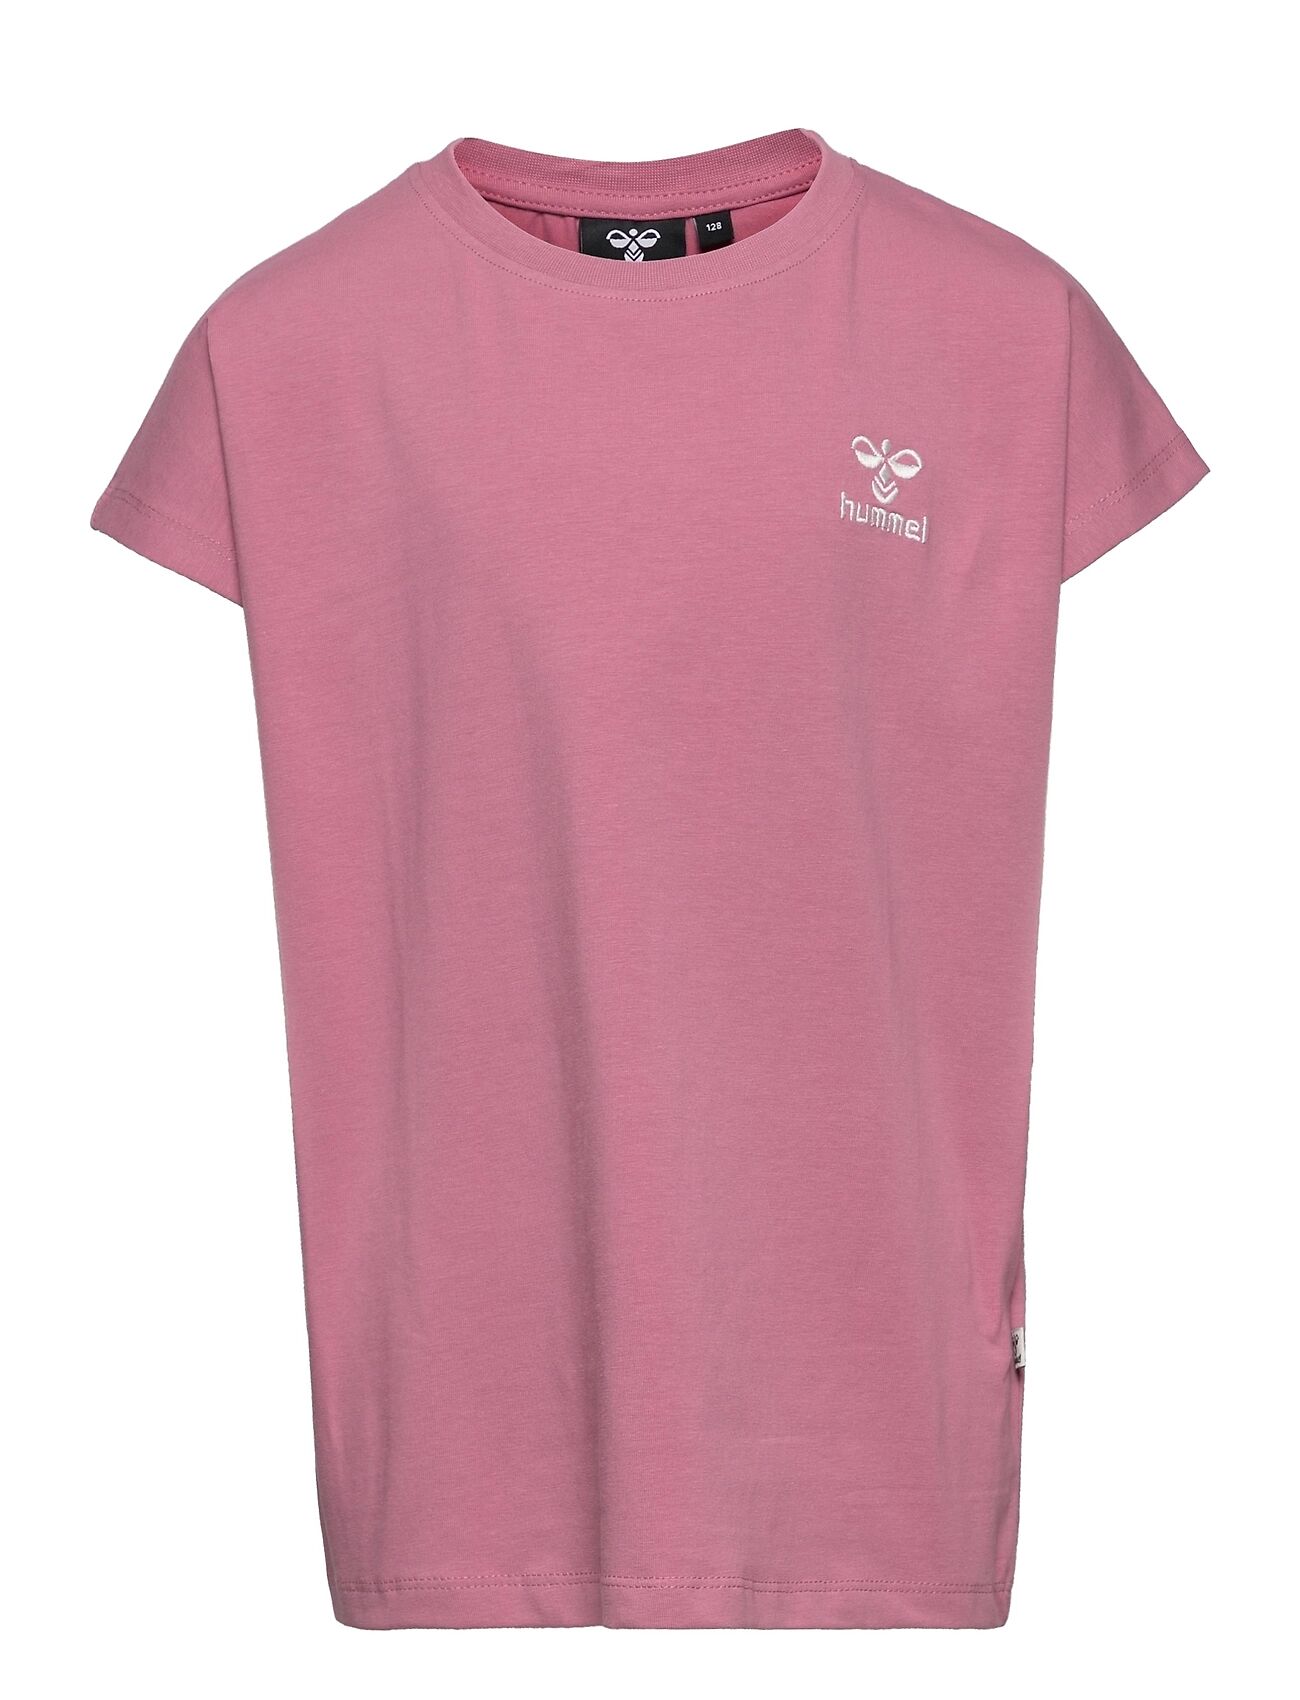 Hummel Hmldoce T-Shirt S/S T-shirts Short-sleeved Rosa Hummel